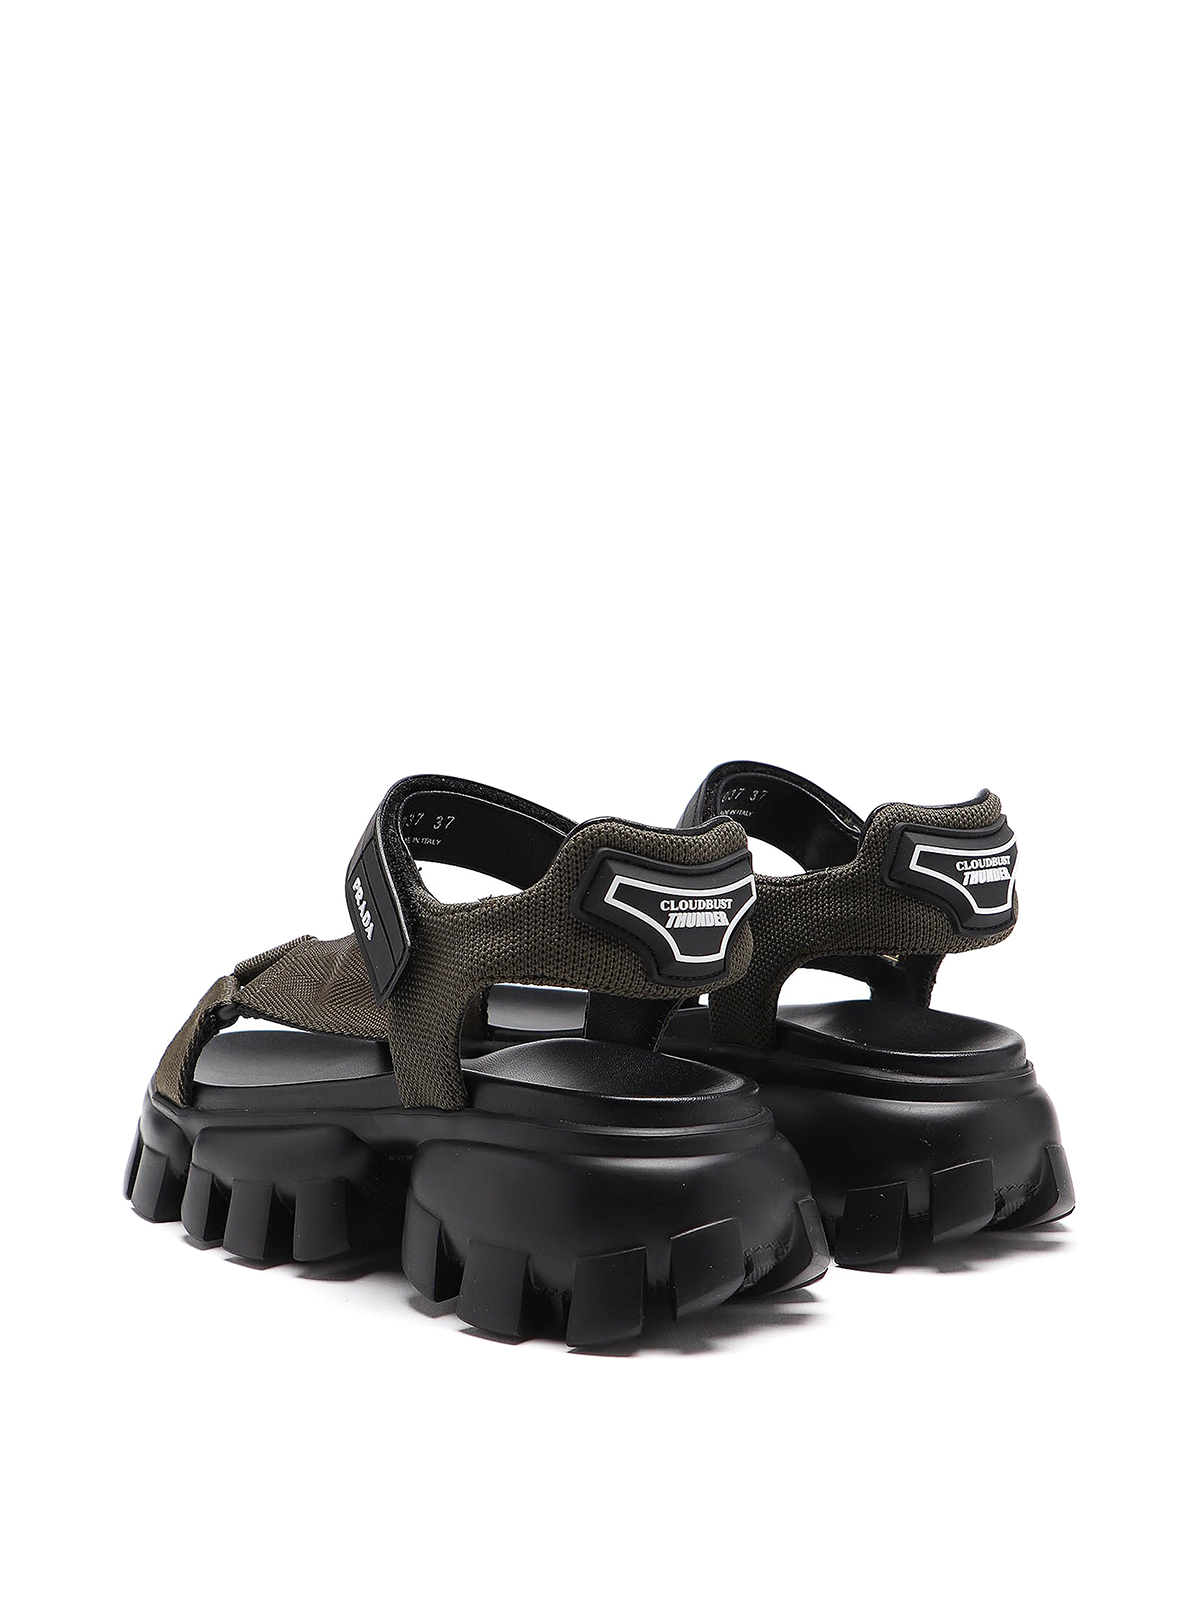 Prada - Cloudbust Thunder sandals 